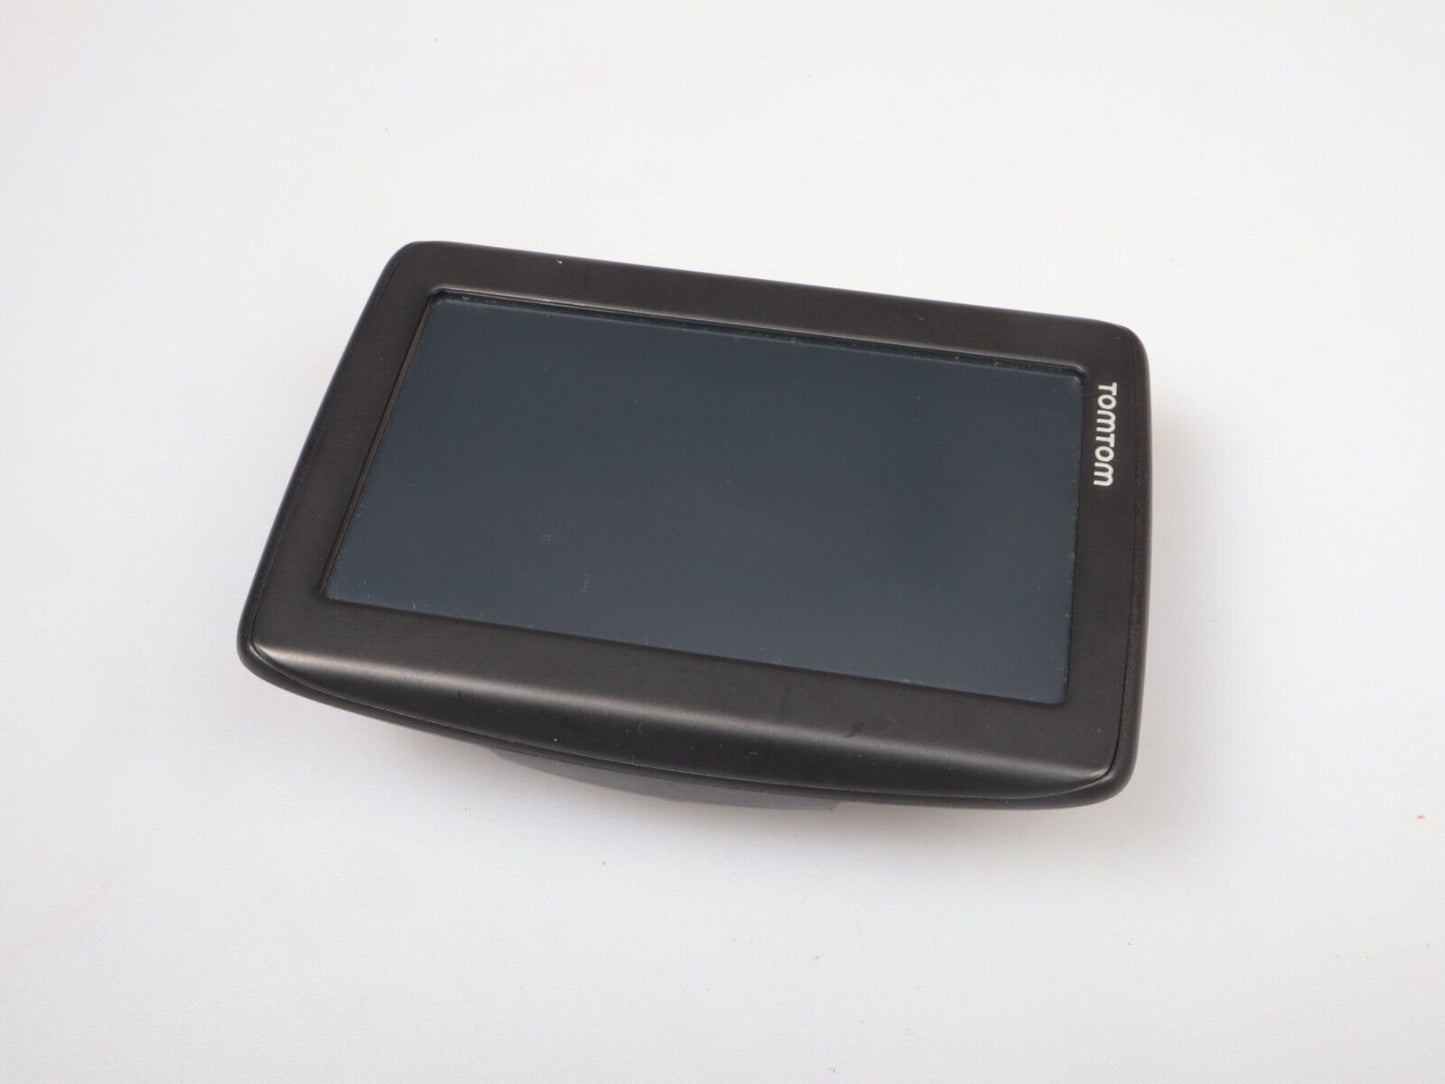 TomTom 4EN52 Z1230 | Automotive GPS Receiver Sat Nav | Black